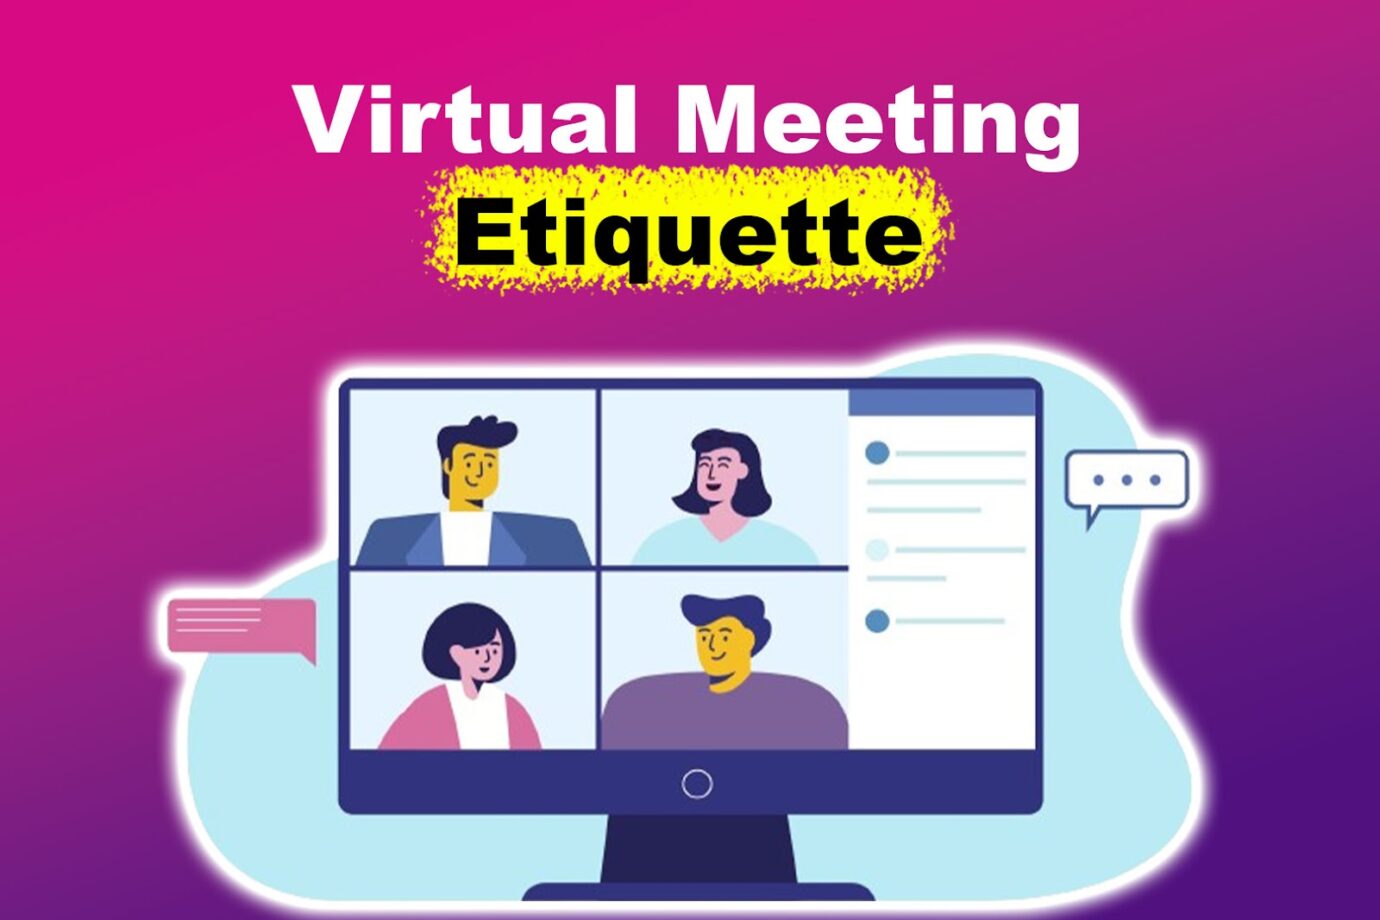 Virtual Meeting Etiquette